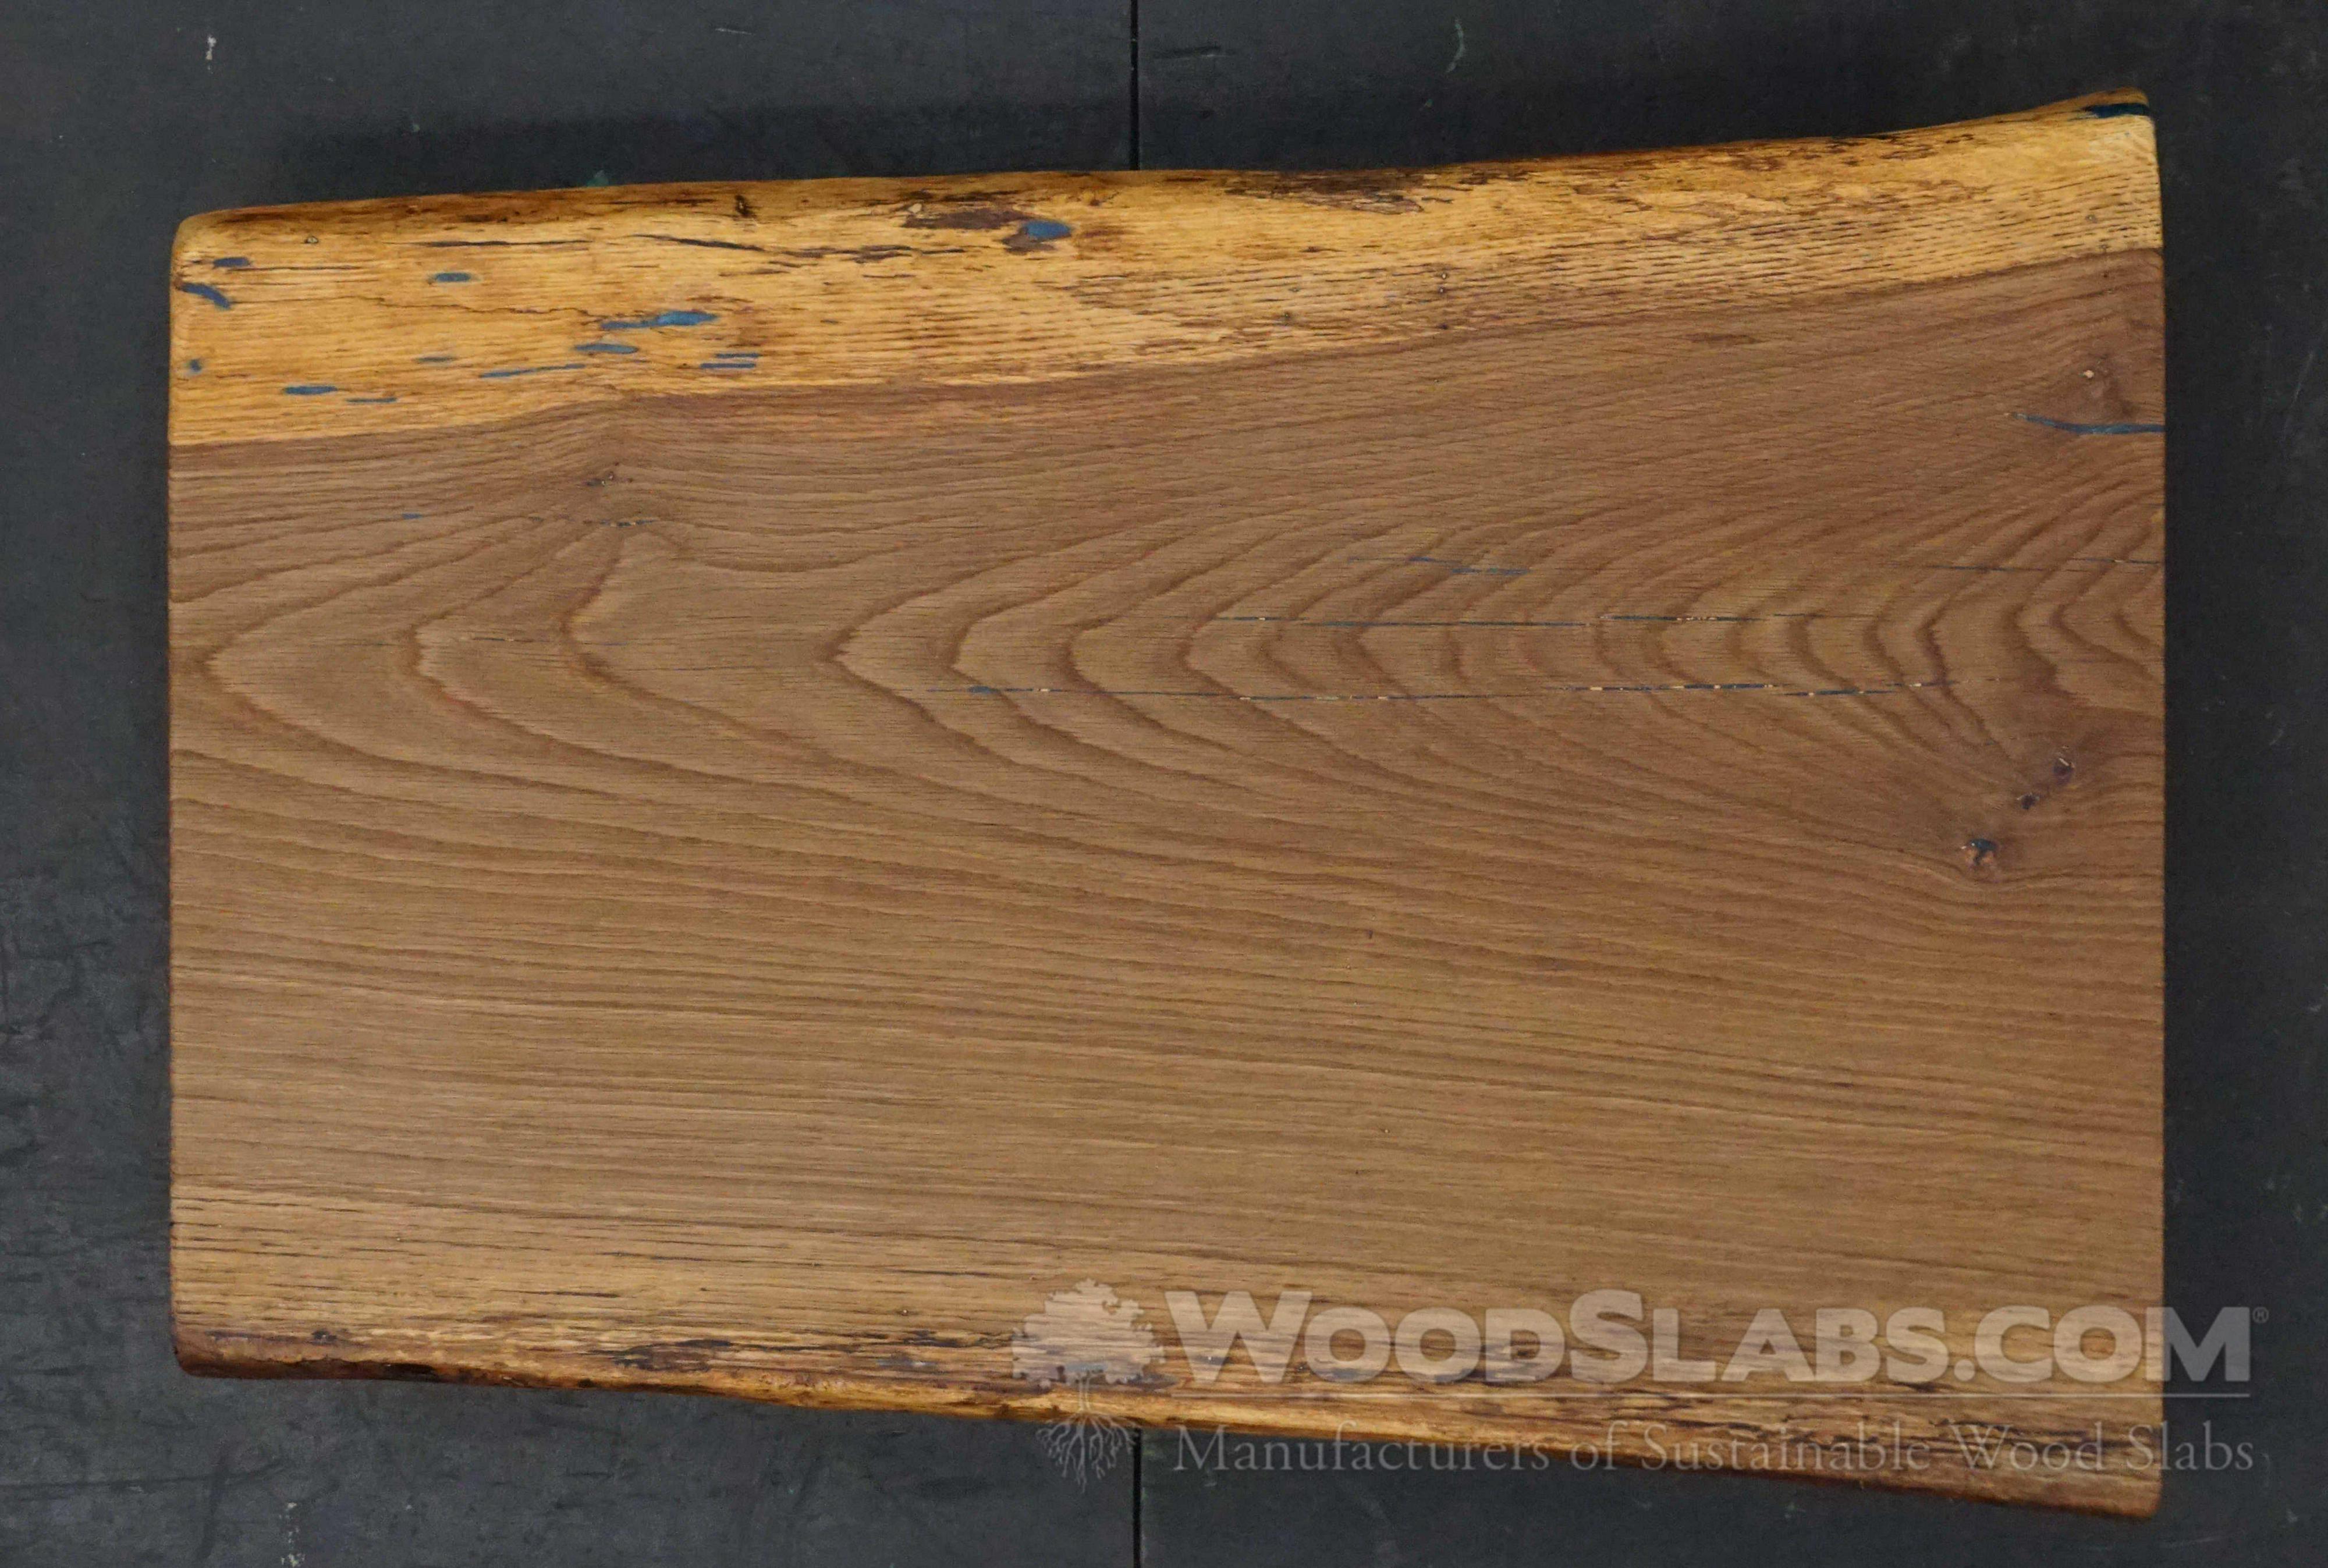 naam Werkwijze krab WoodSlabs.com - White Oak Wood Slab #ZBK-8TH-6UA0